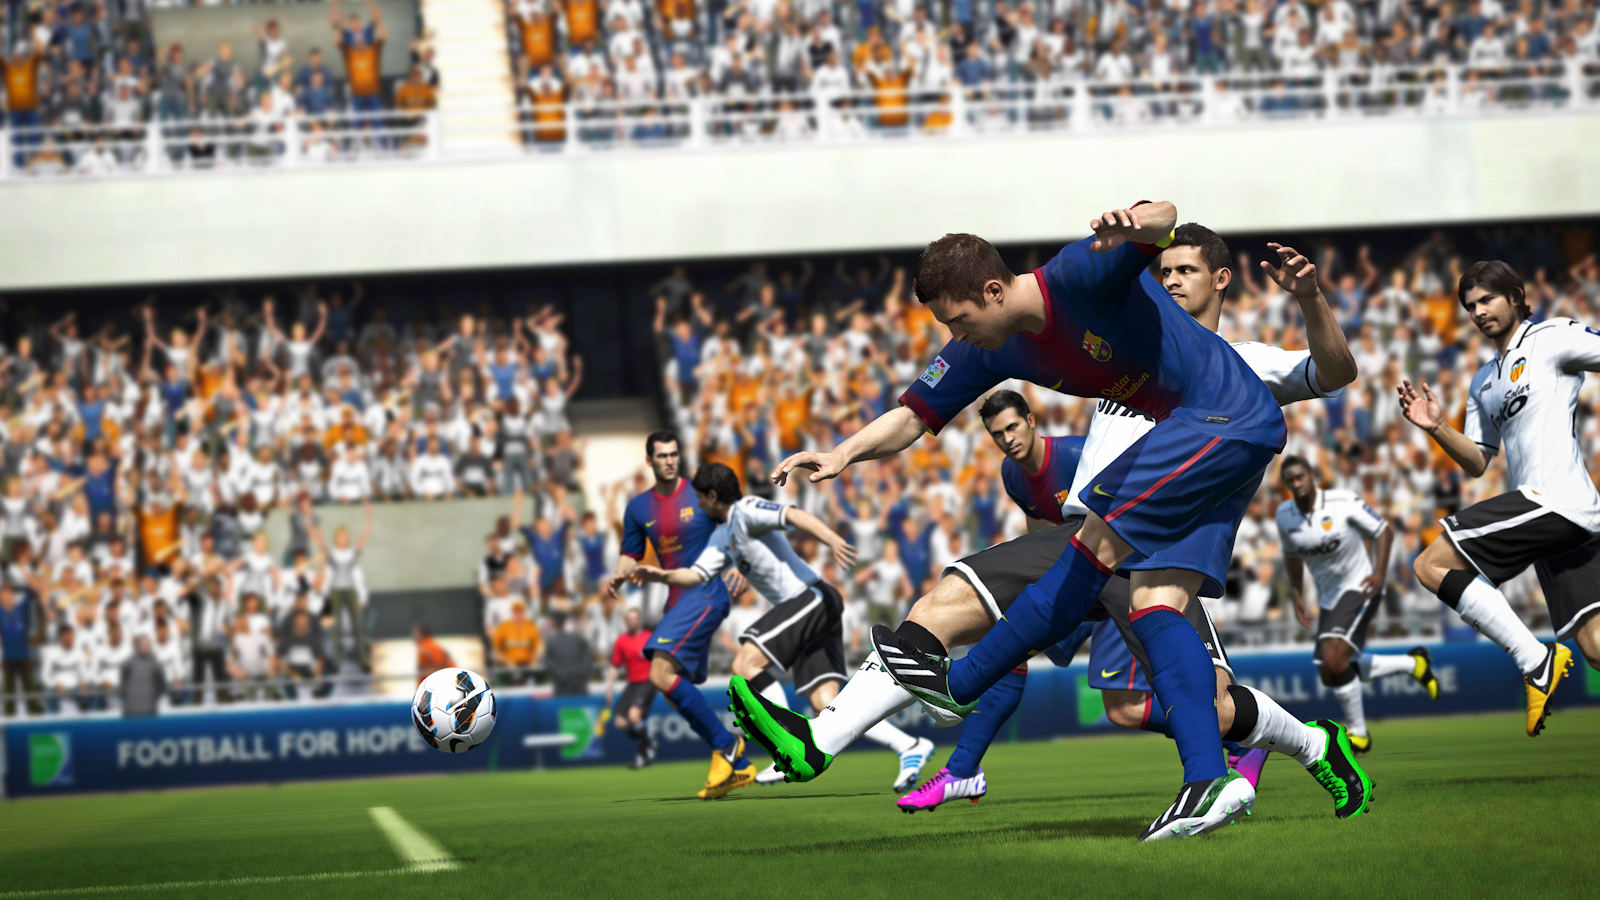 FIFA Video Games - Official EA Site